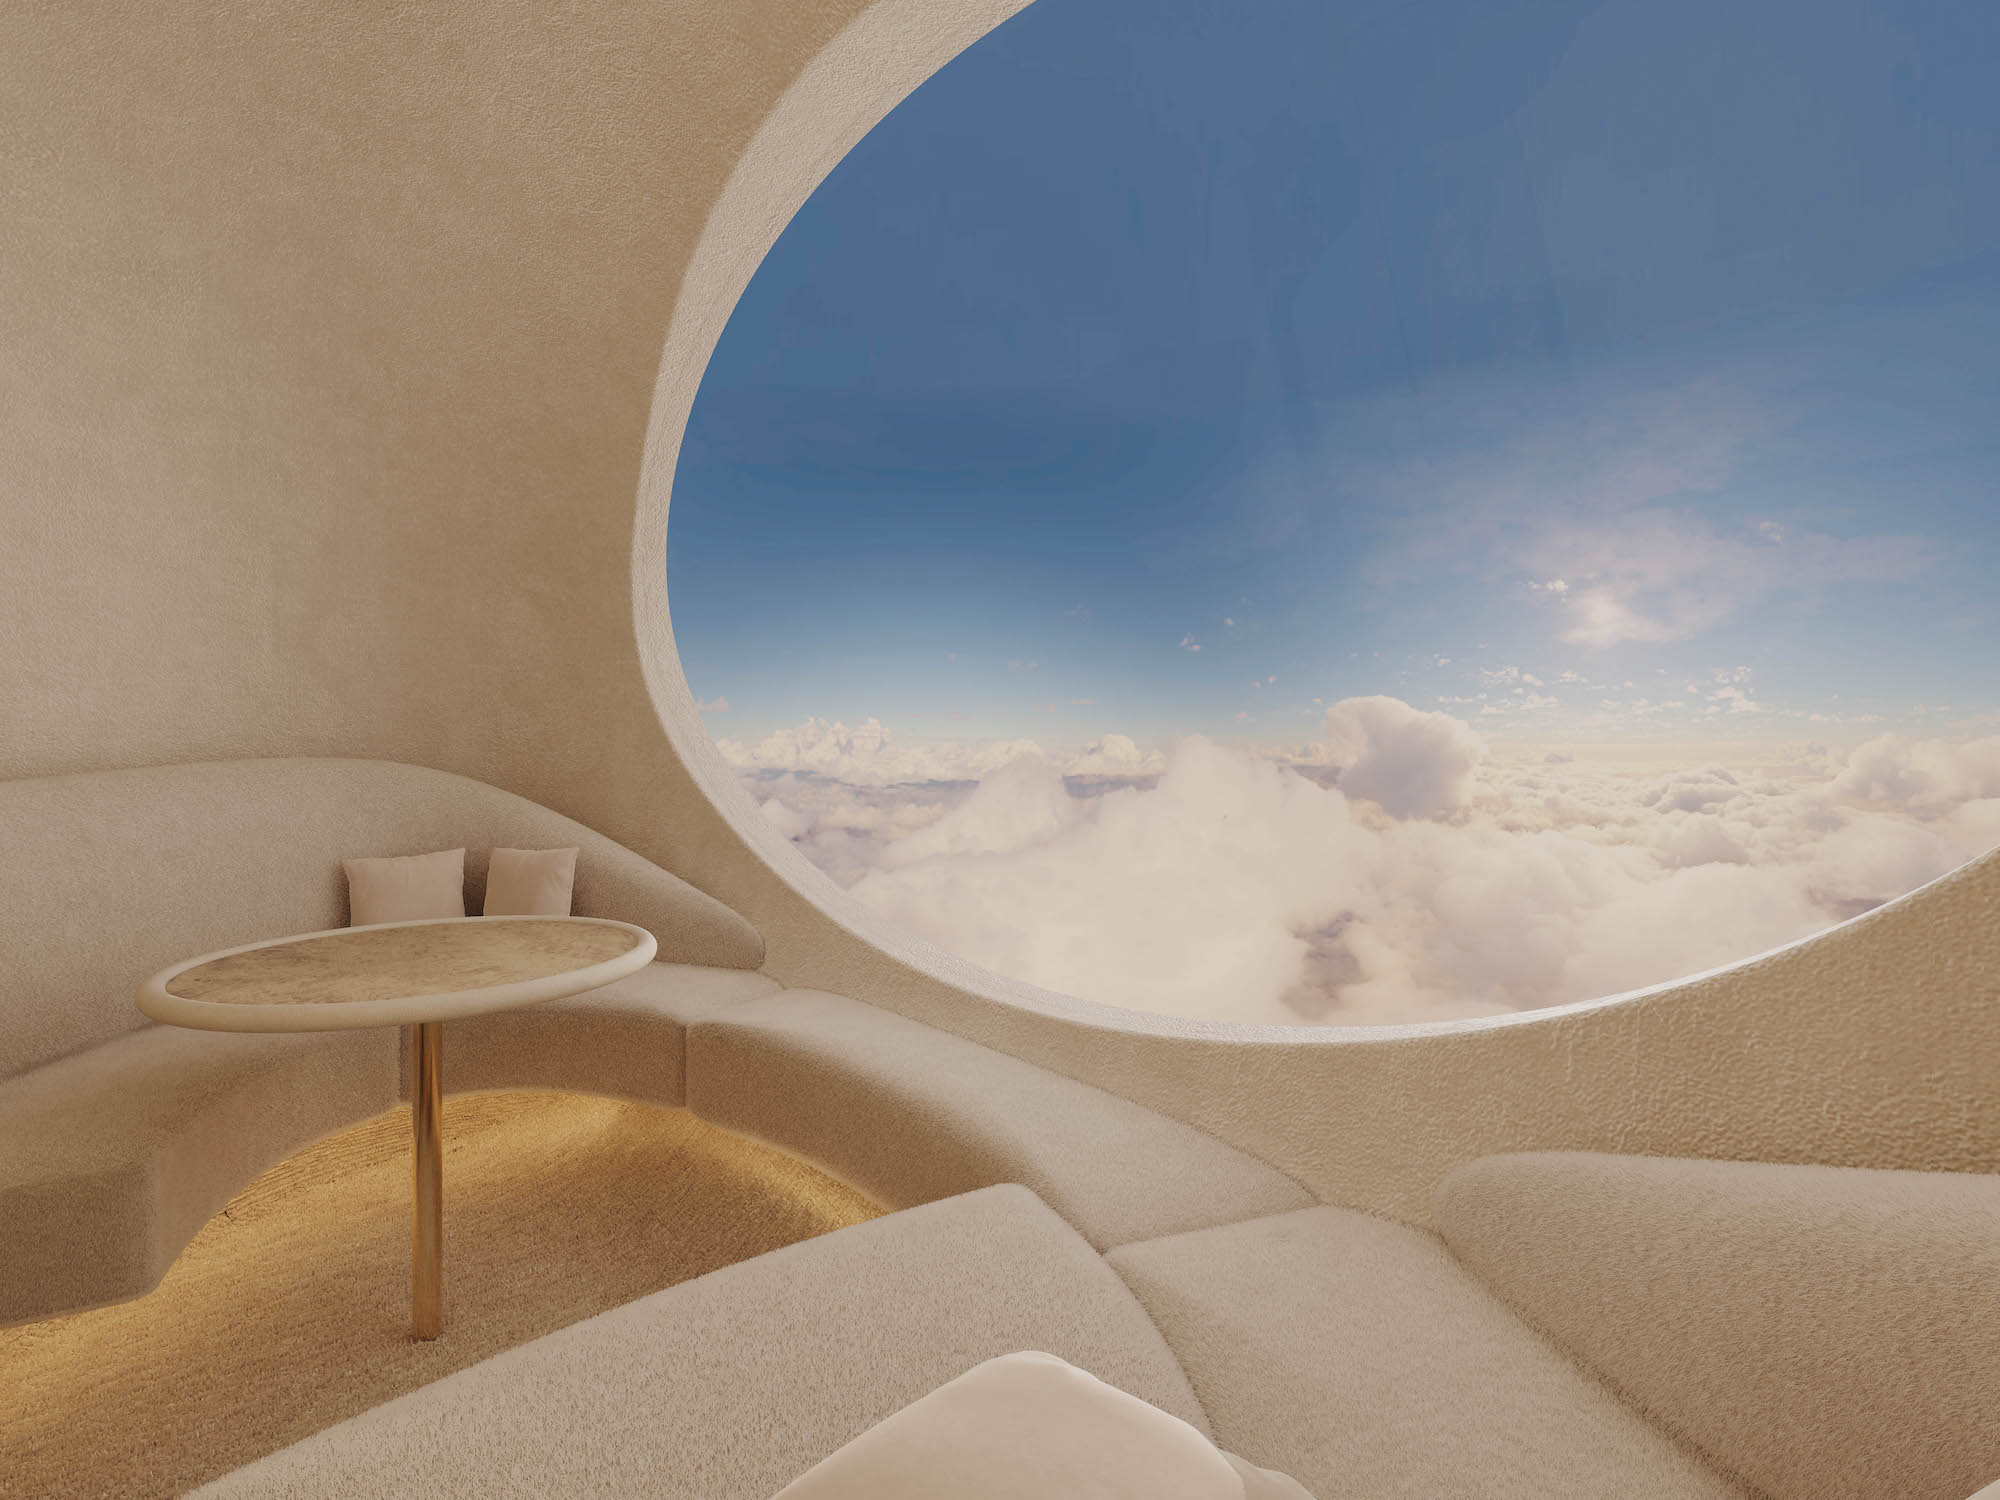 Interiors of the Céleste Space Capsule by Zephalto, interior designed by Joseph Dirand in Effect Magazine